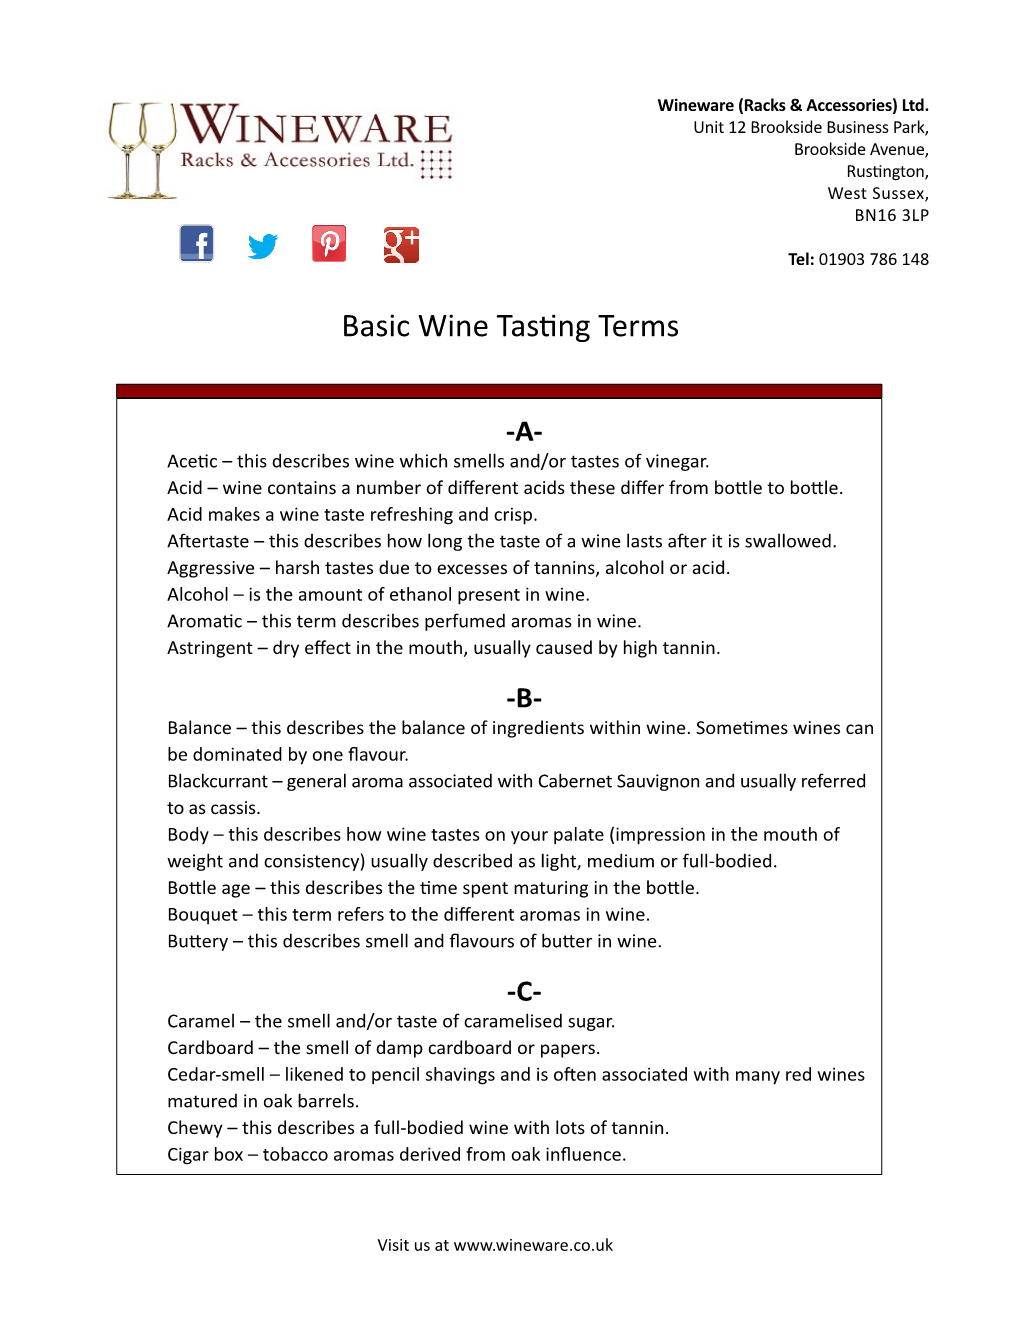 Basic Wine Tasting Terms